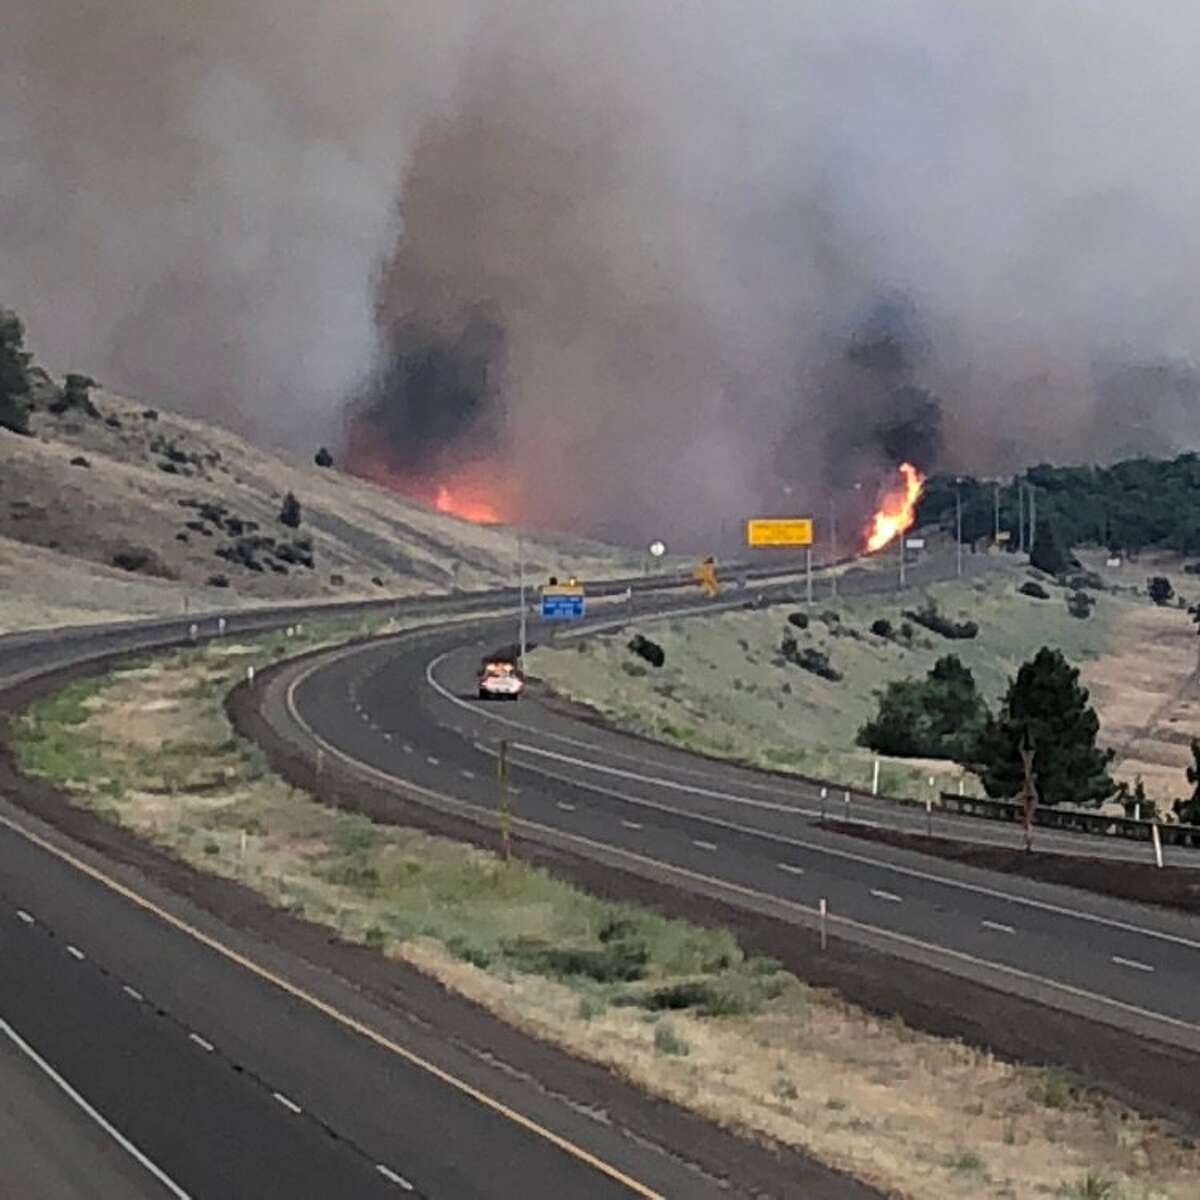 The Oregon Dept. of Transportation posted this photo of the Klamathon fire burning both sides of I-5 south of Hilt interchange on Thursday July 5th.